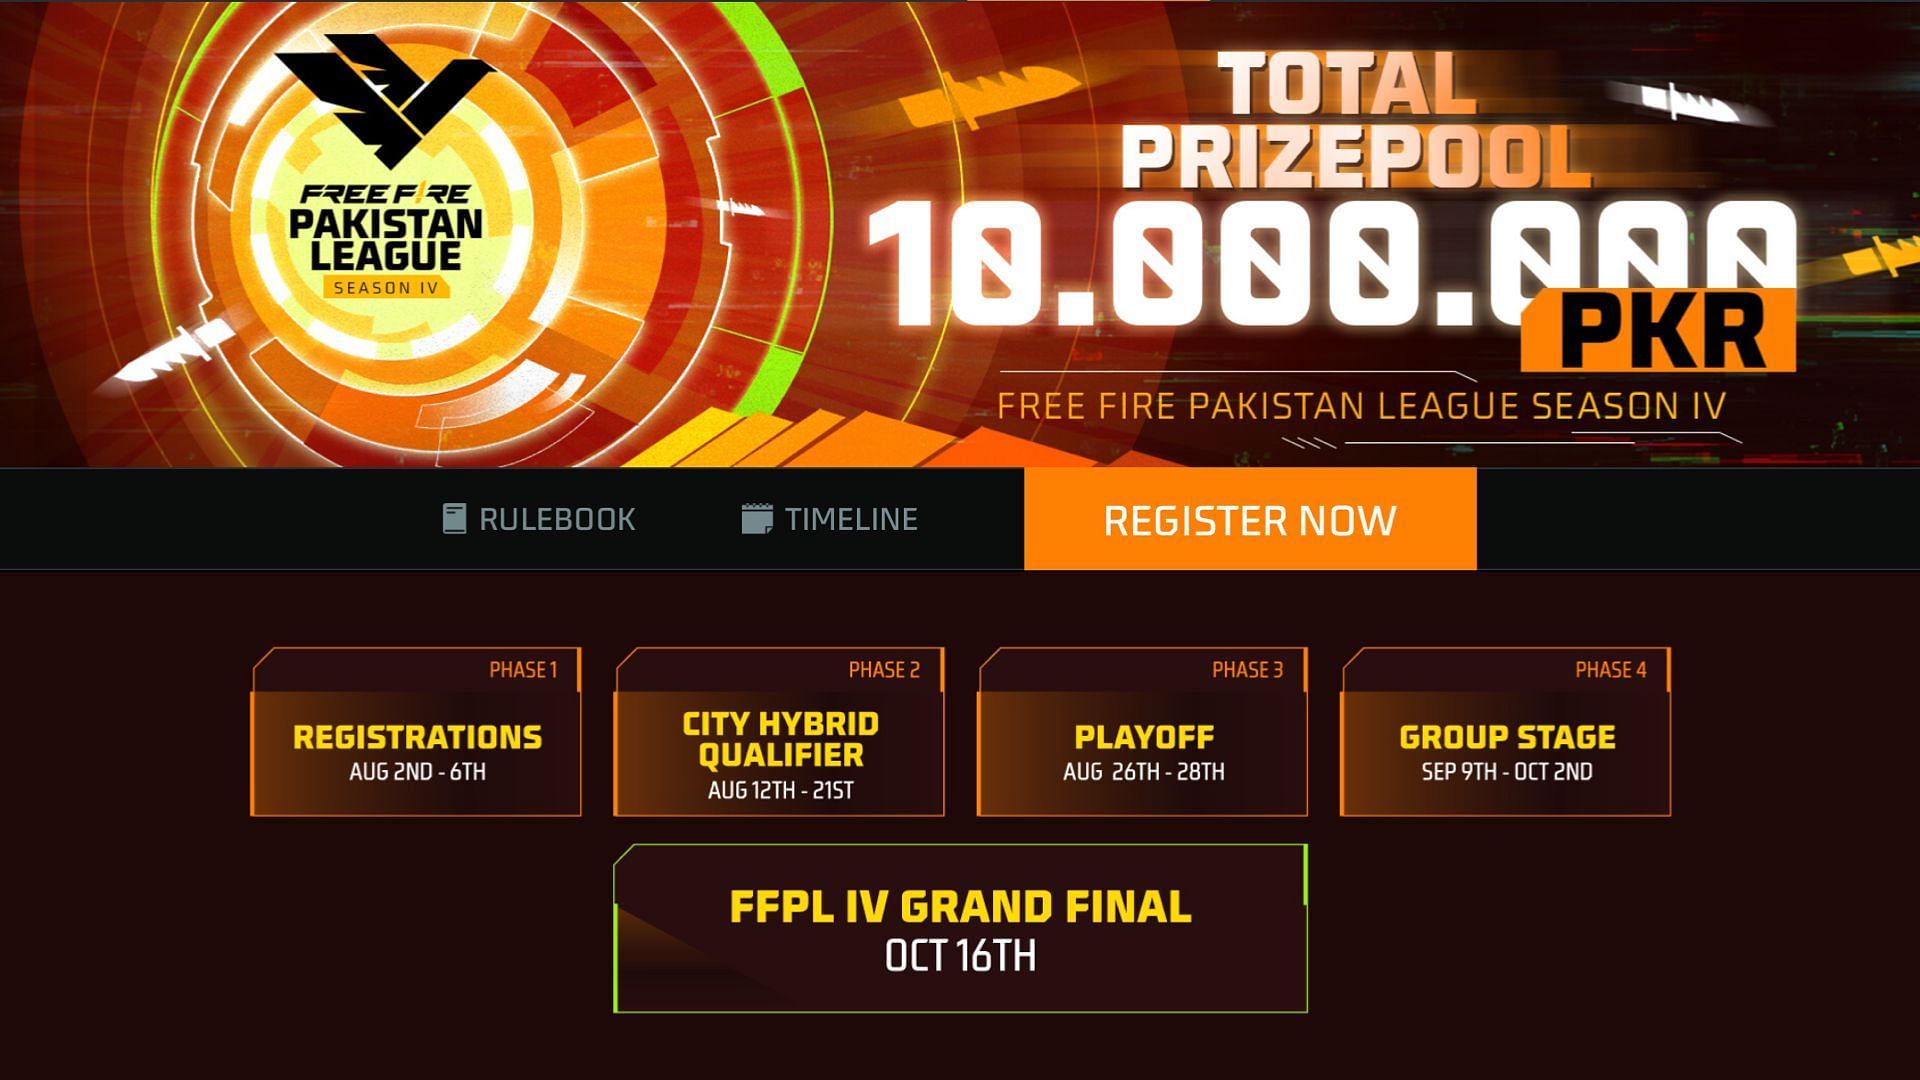 Registrations for the Free Fire Pakistan League Season 4 starts today (Image via Garena)